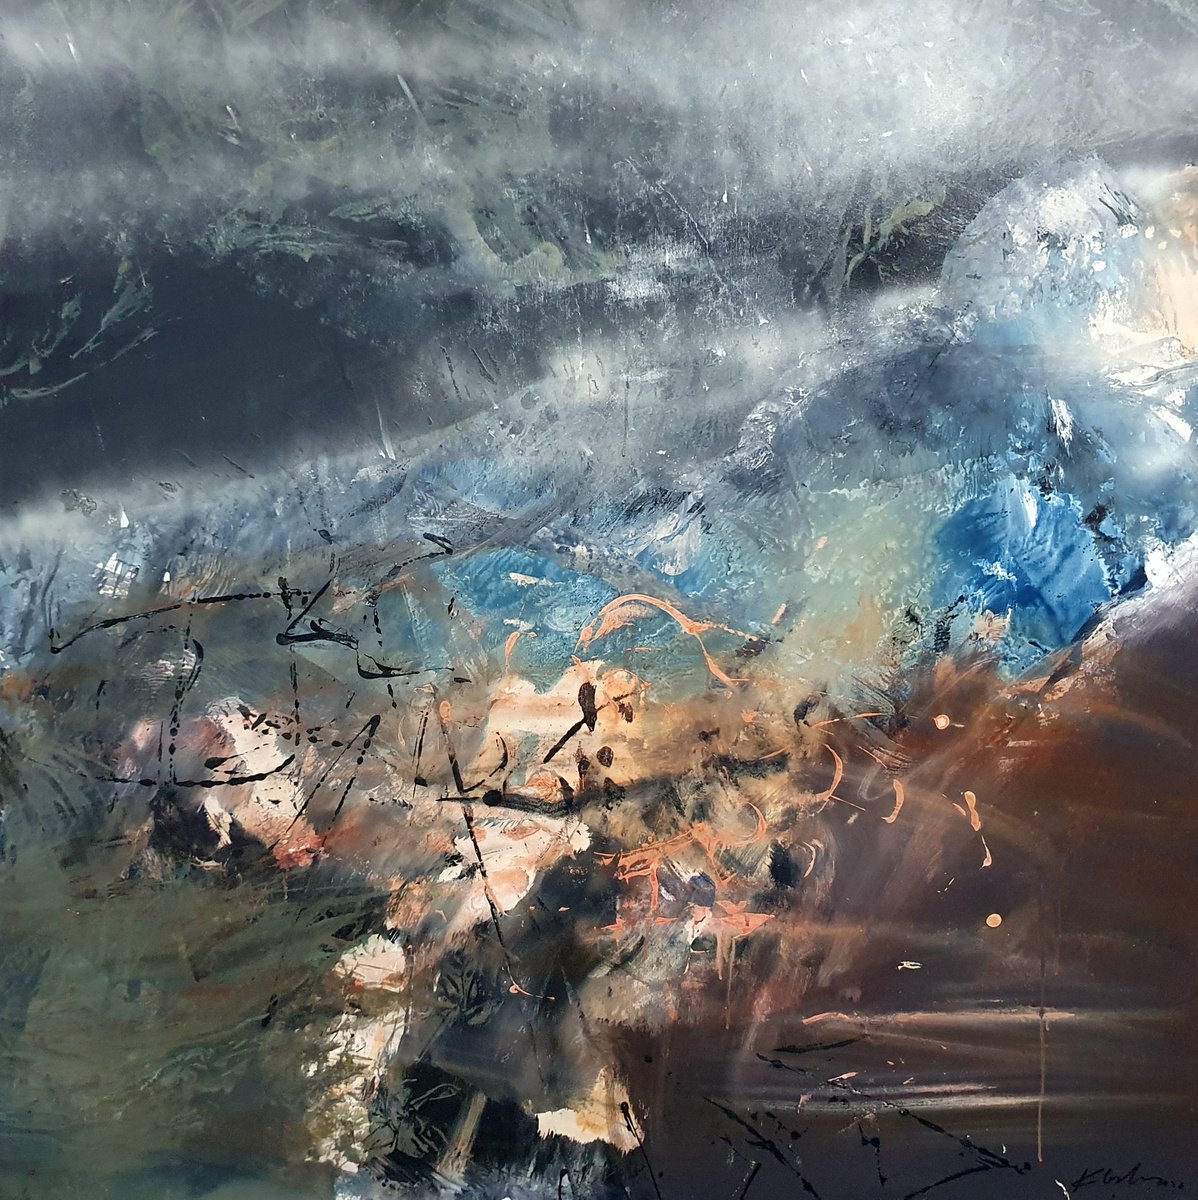 Huge XXL Painting Spiritual Human Condition Escape From Mundane By O KLOSKA, 2020 by Kloska Ovidiu